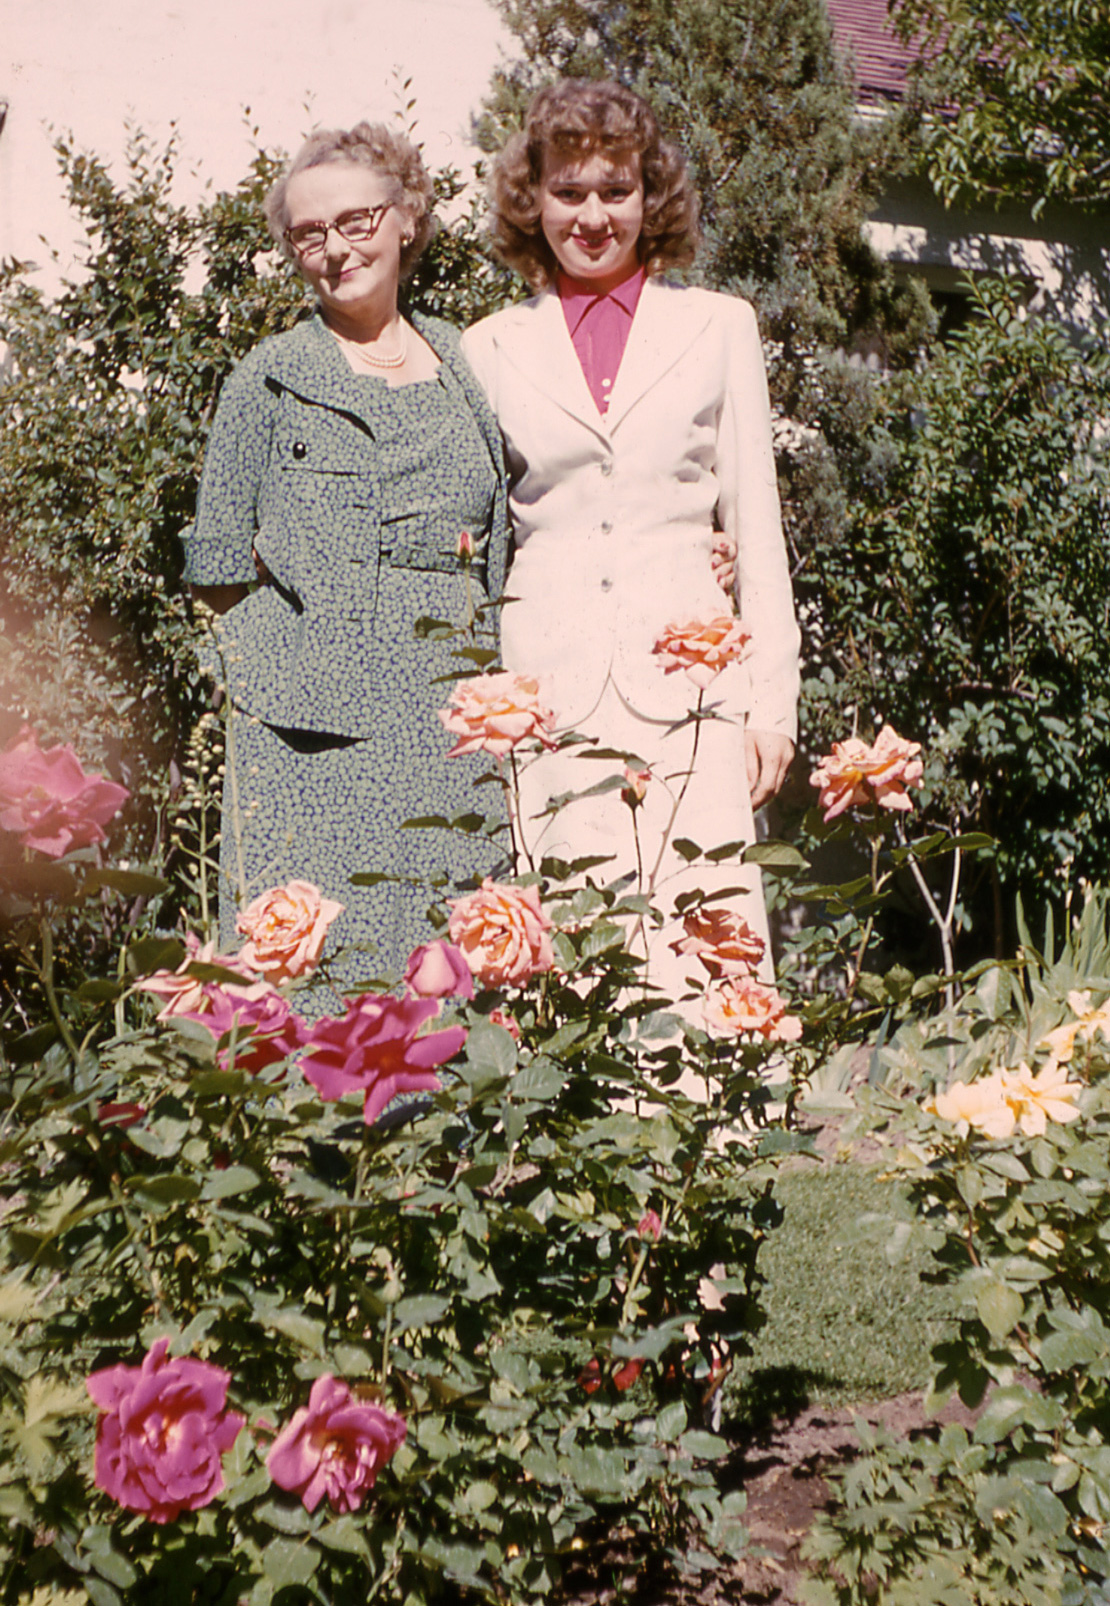 Mim & Peggy in the rose garden